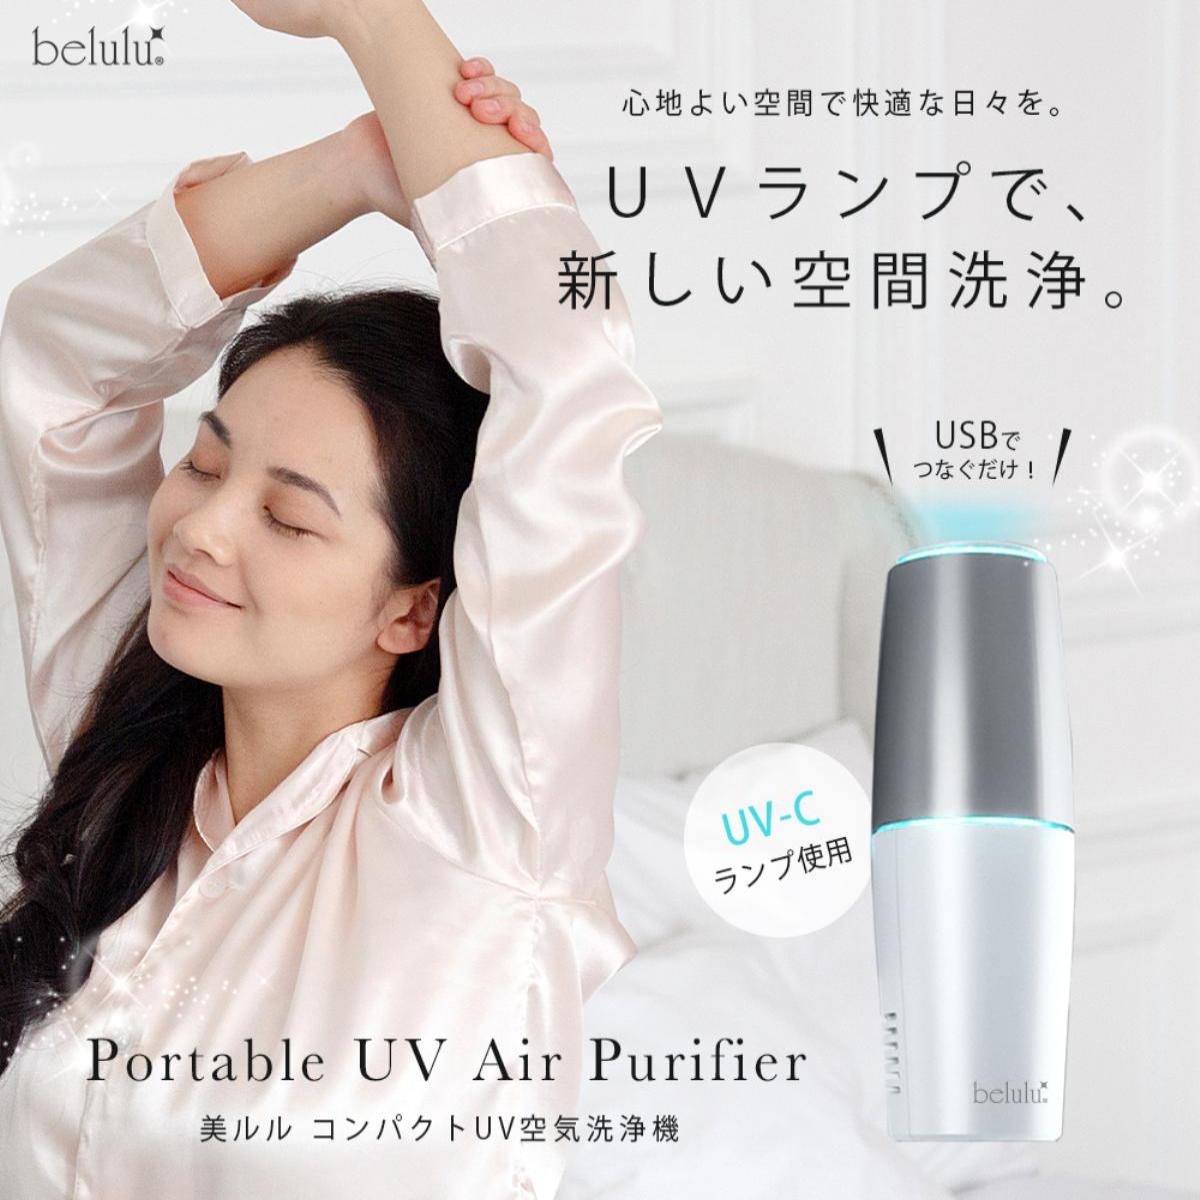 belulu KRDUVAIR 美ルル 空気清浄機 コンパクト UVライト 除菌 空間洗浄 UV Air Purifier 母の日